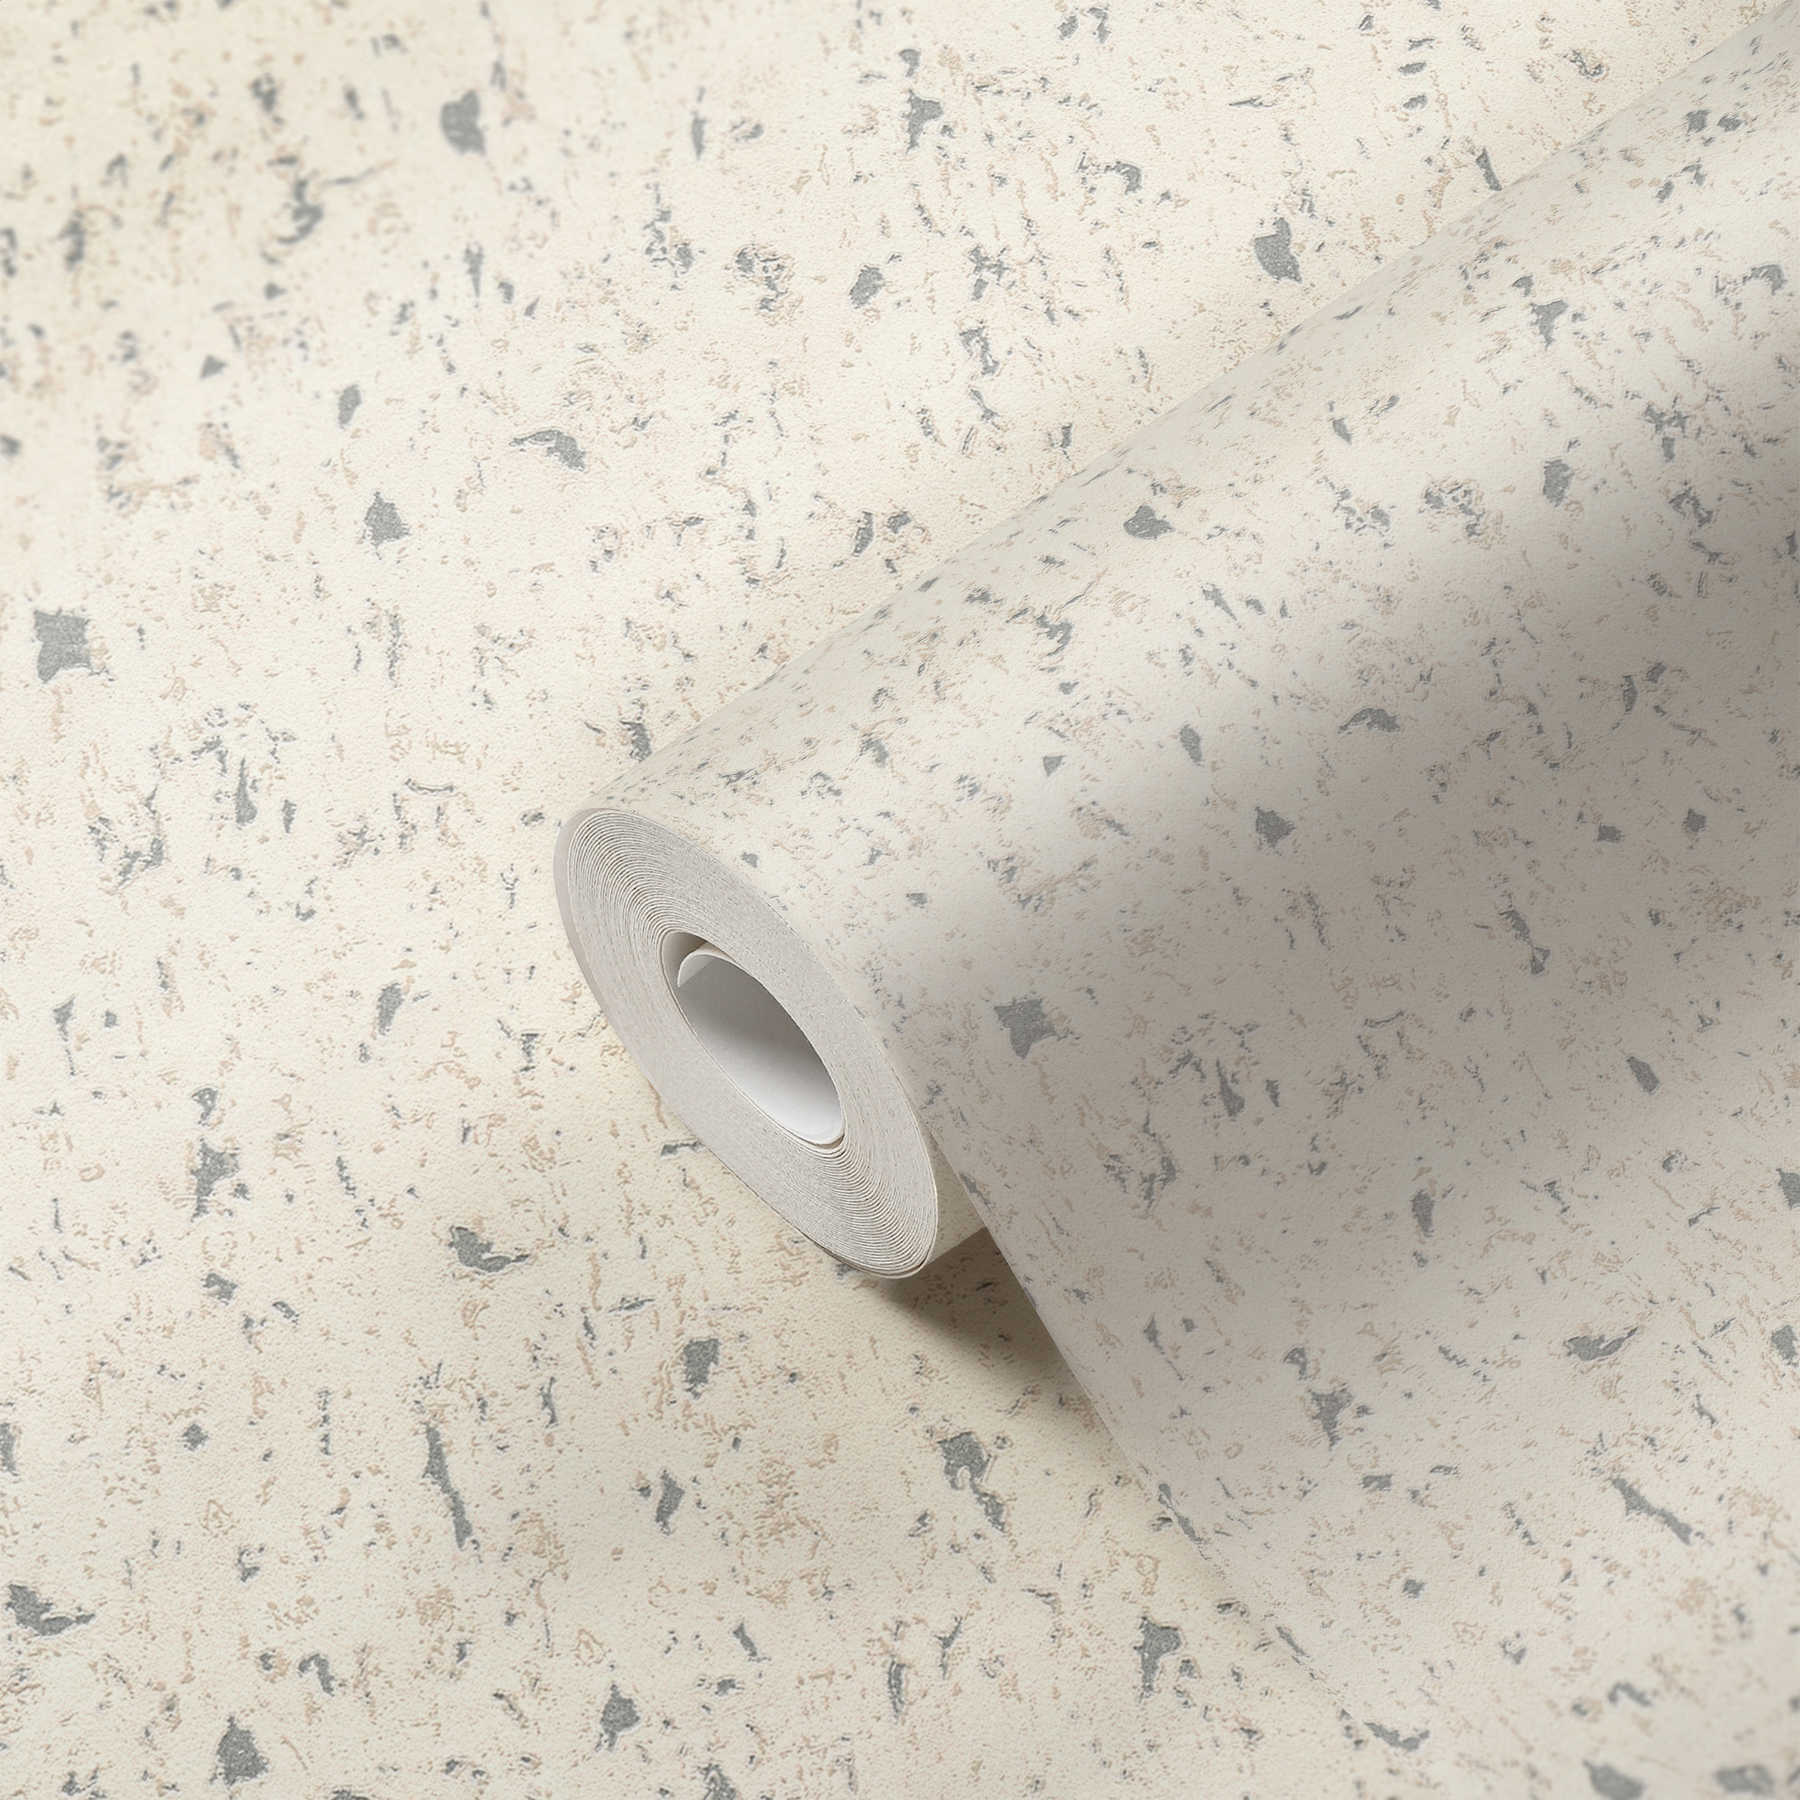             Non-woven wallpaper cork look with metallic effect - white, silver
        